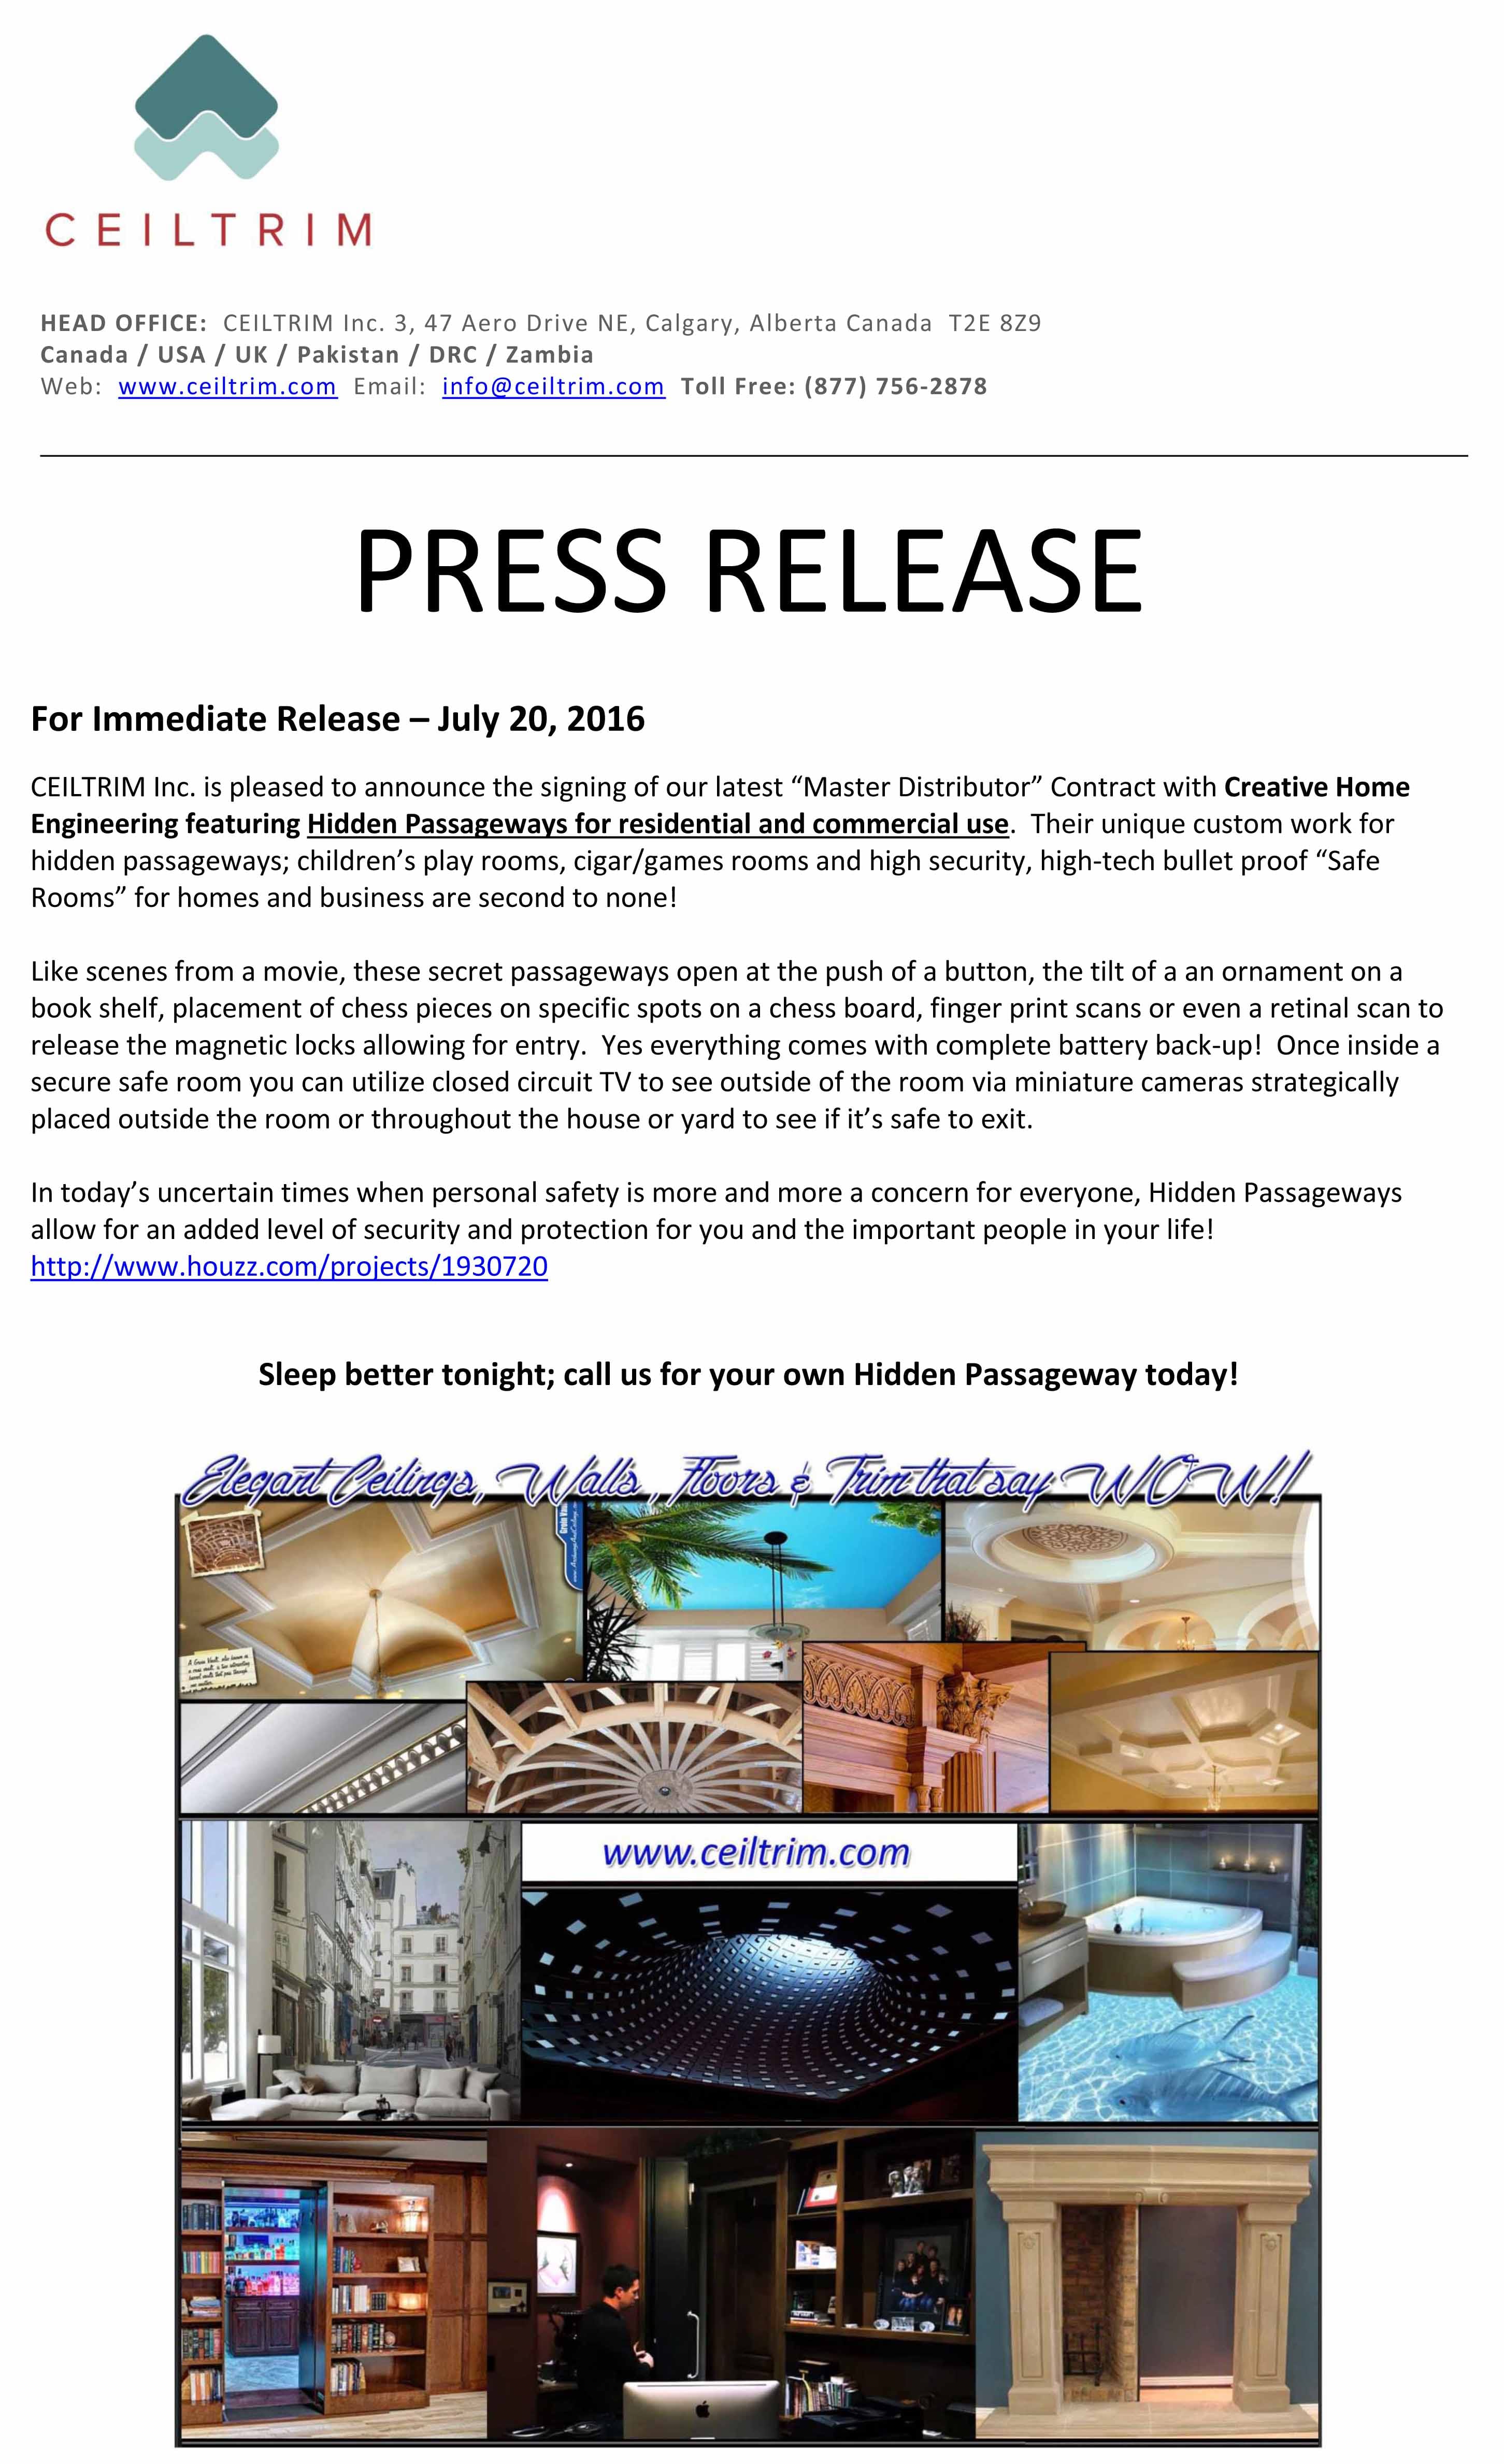 Hidden Passageways Press Release July 20 2016 version 2